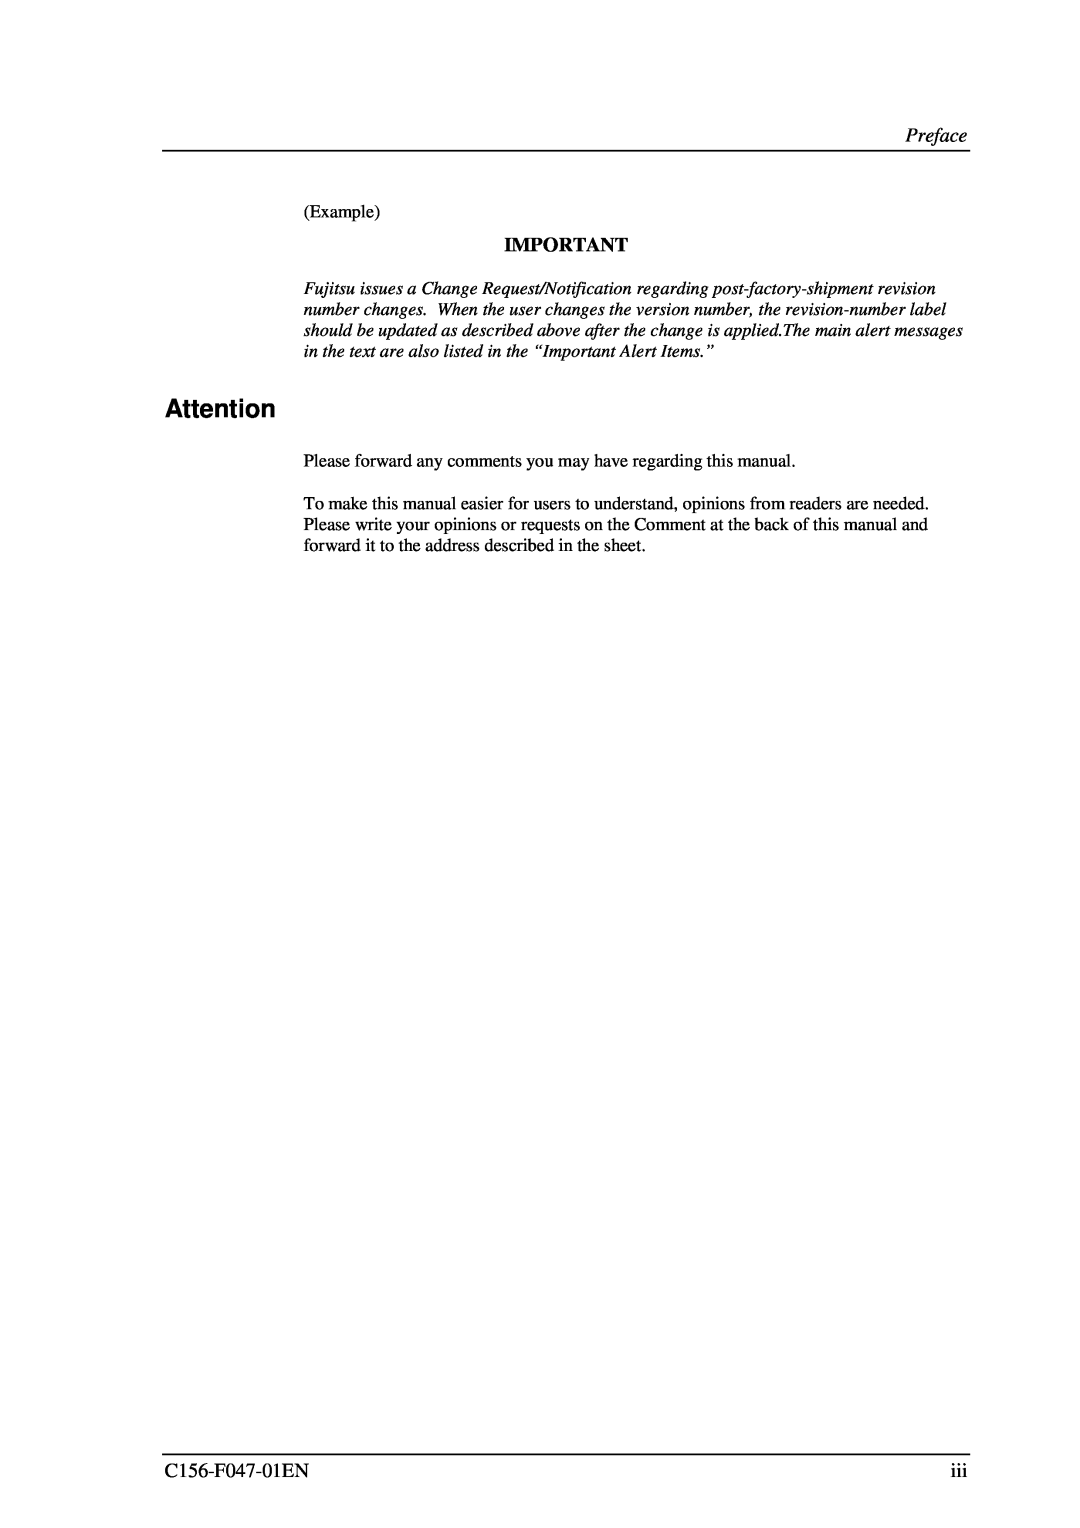 Fujitsu MDG3230UB manual Preface, Example 